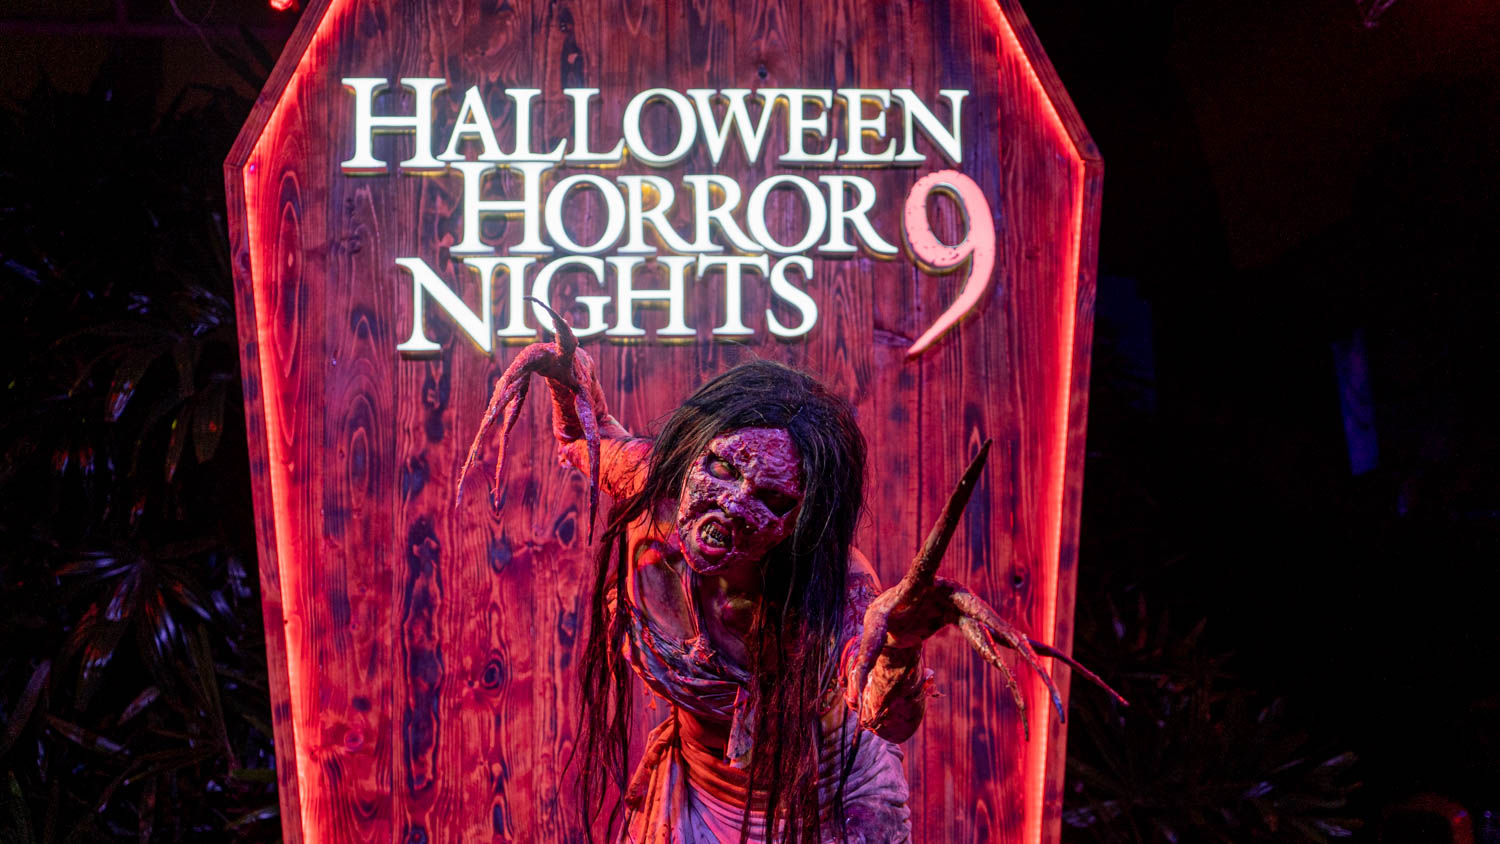 halloween horror nights 2020 review Geek Review Halloween Horror Nights 9 Universal Studios Singapore Geek Culture halloween horror nights 2020 review